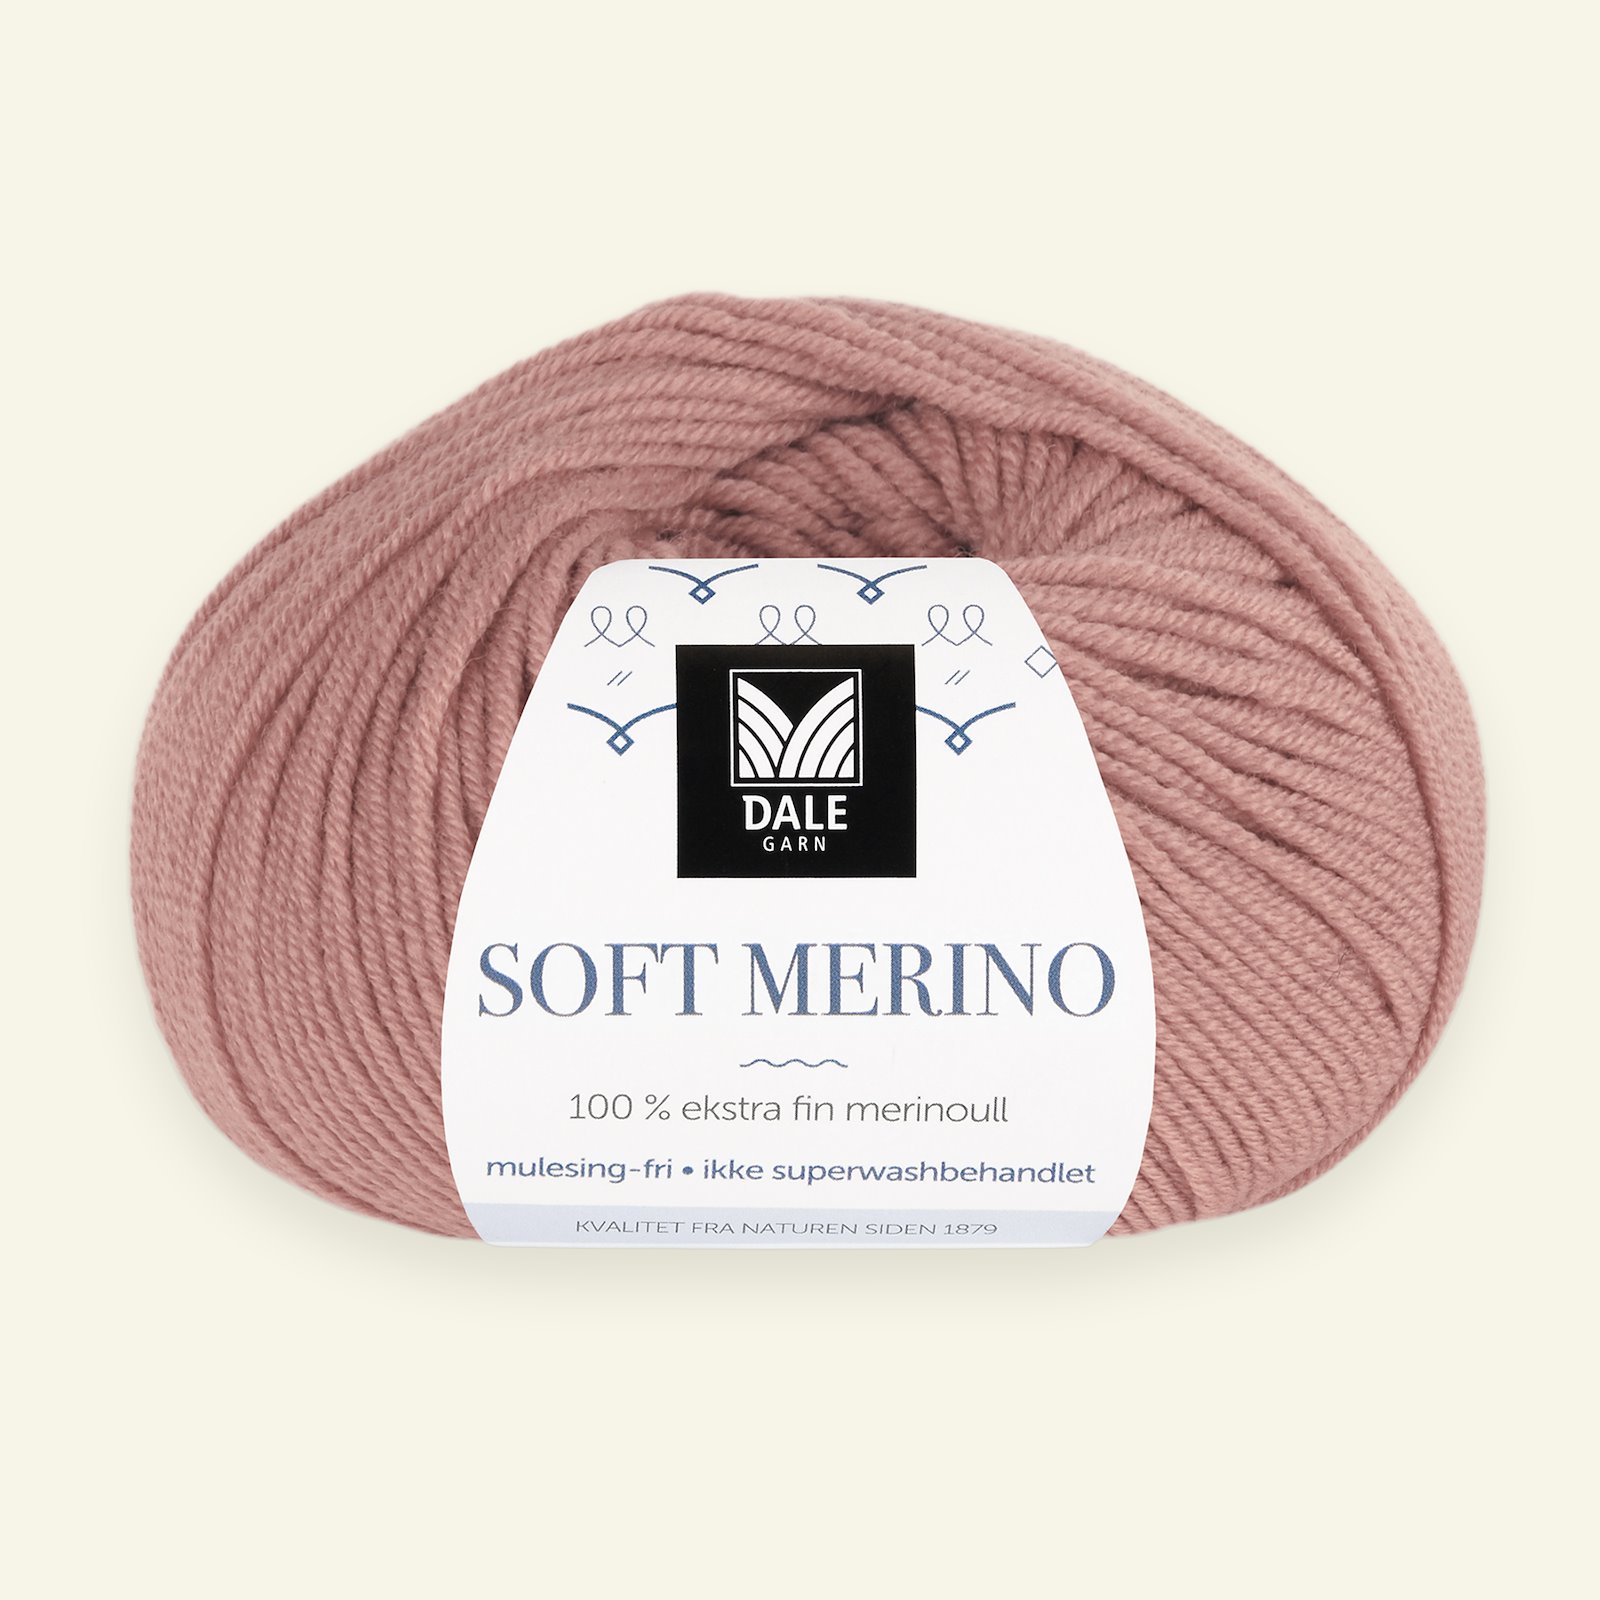 Dale Garn, 100% extra fine merino wool yarn, "Soft Merino", old rose (3040) 90000361_pack